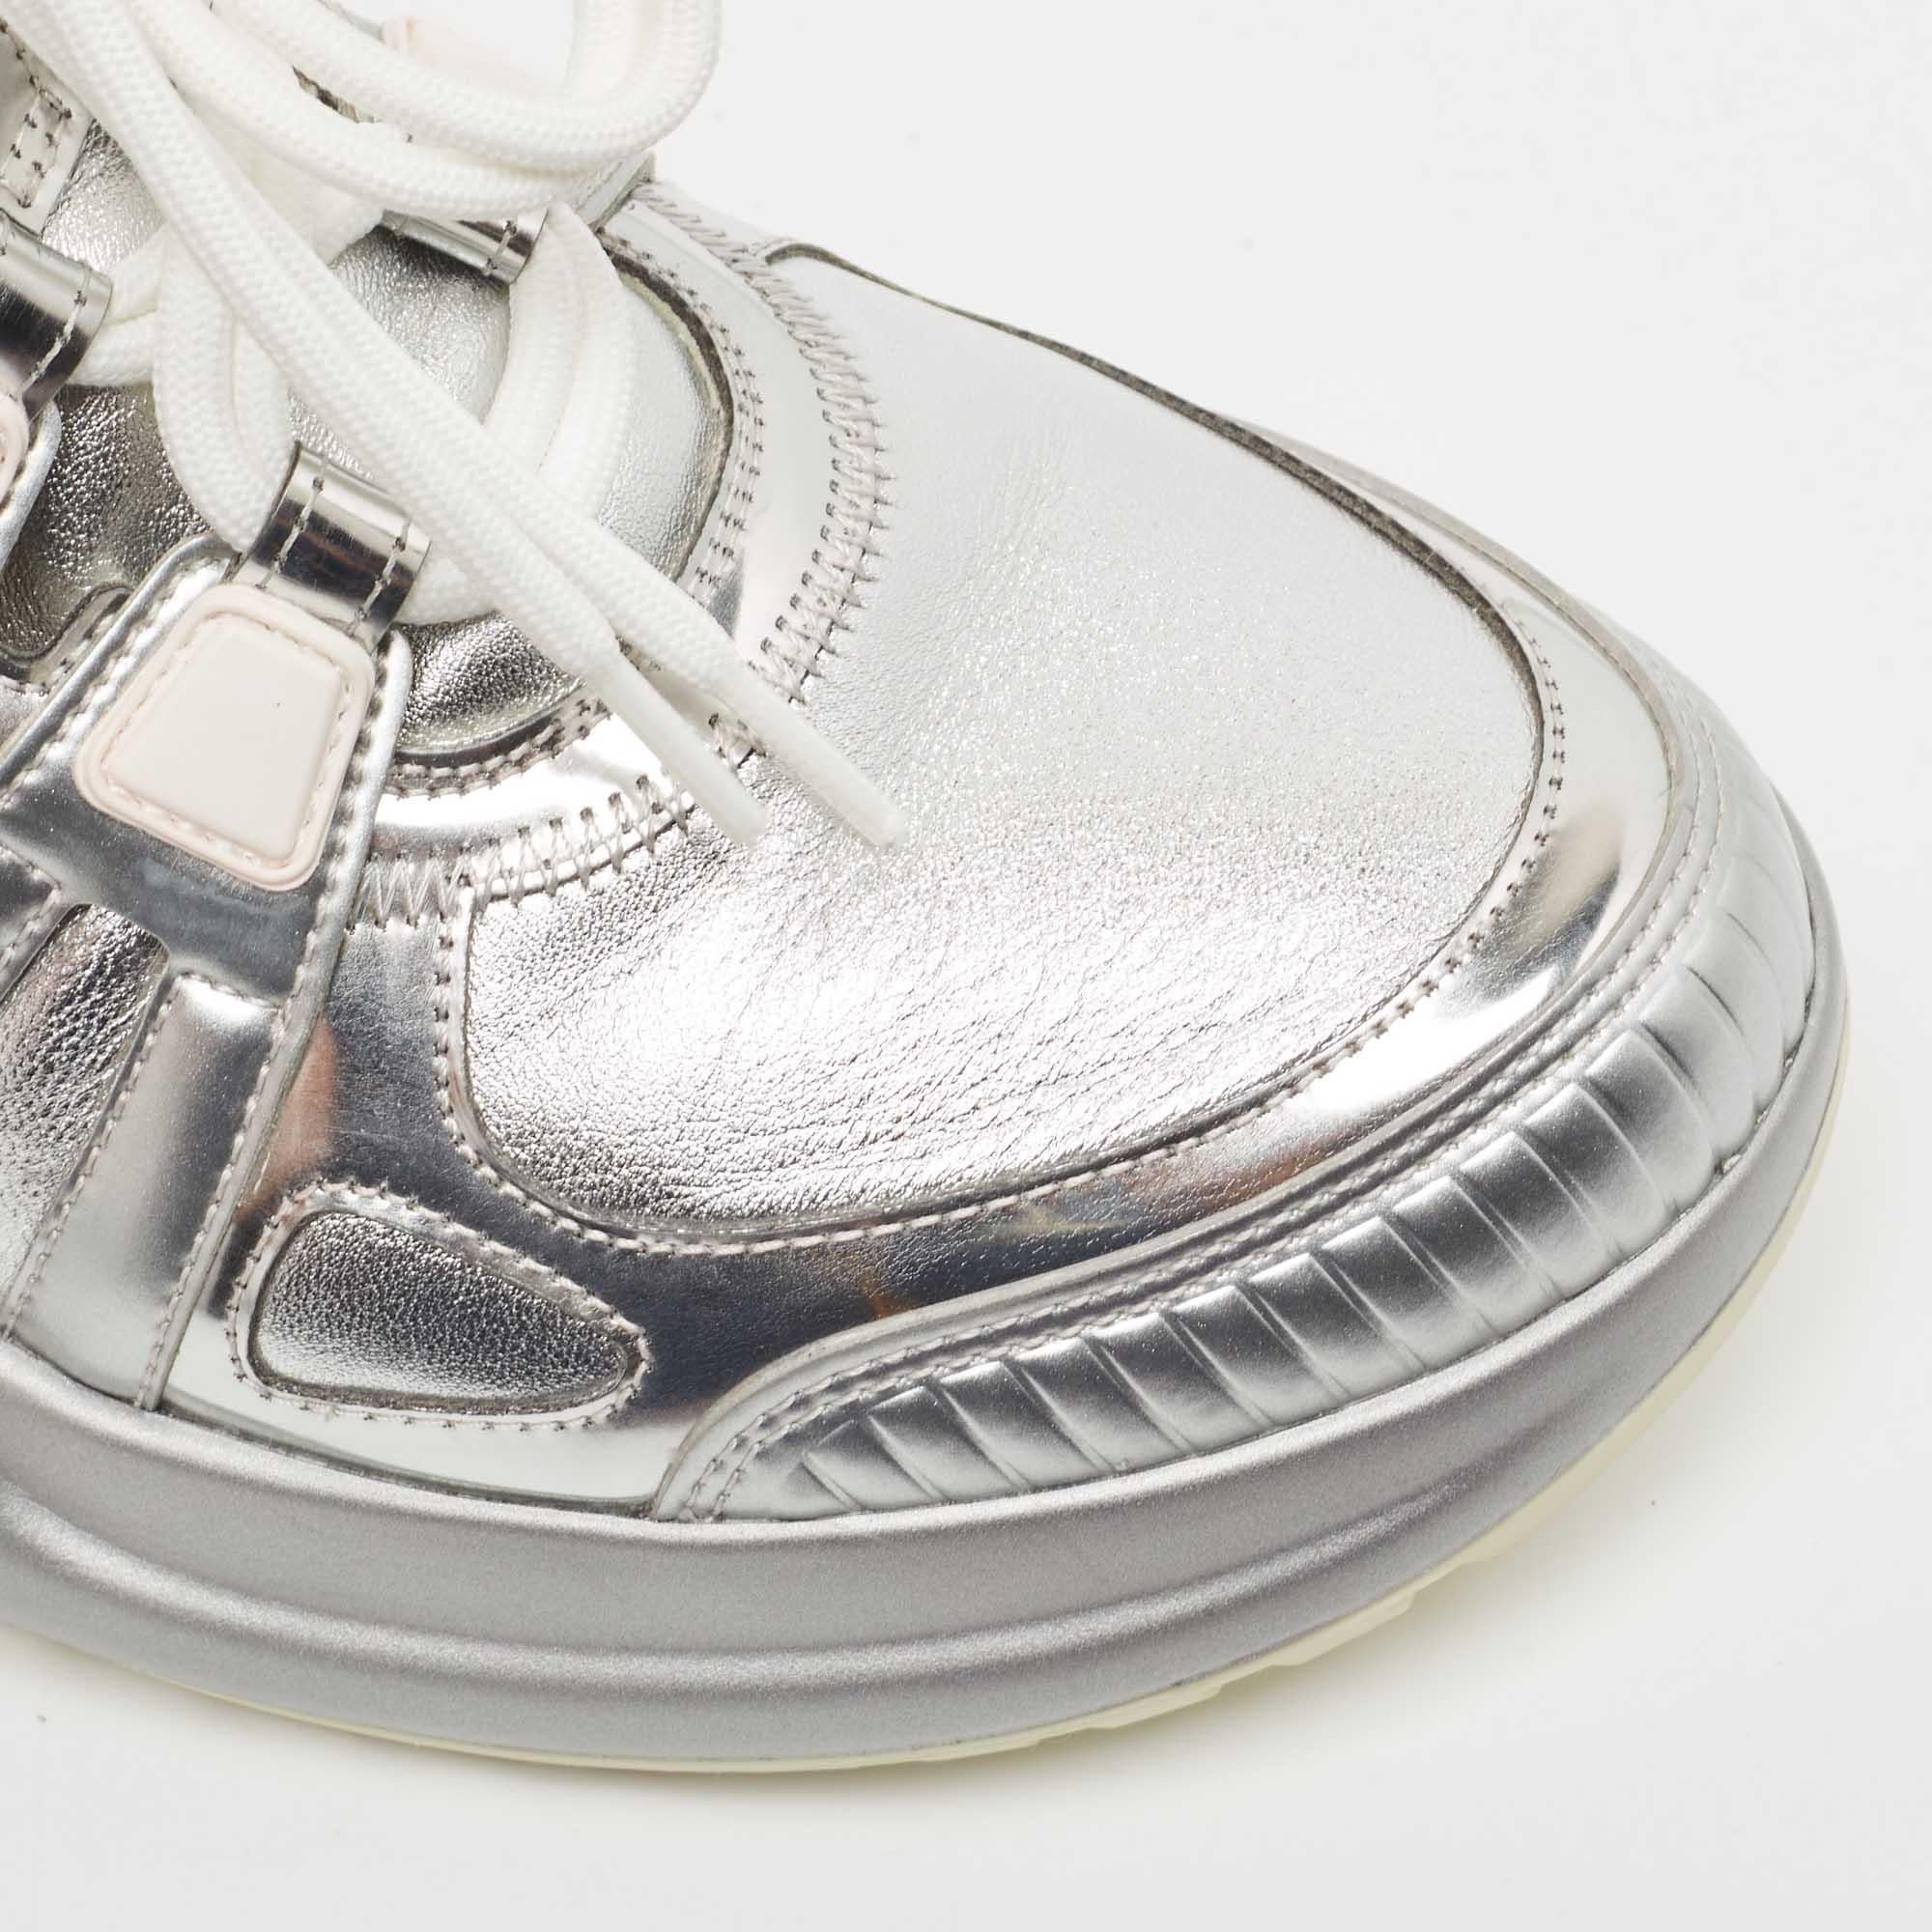 Louis Vuitton Silver Leather Archlight Sneakers Size 40 In Excellent Condition For Sale In Dubai, Al Qouz 2